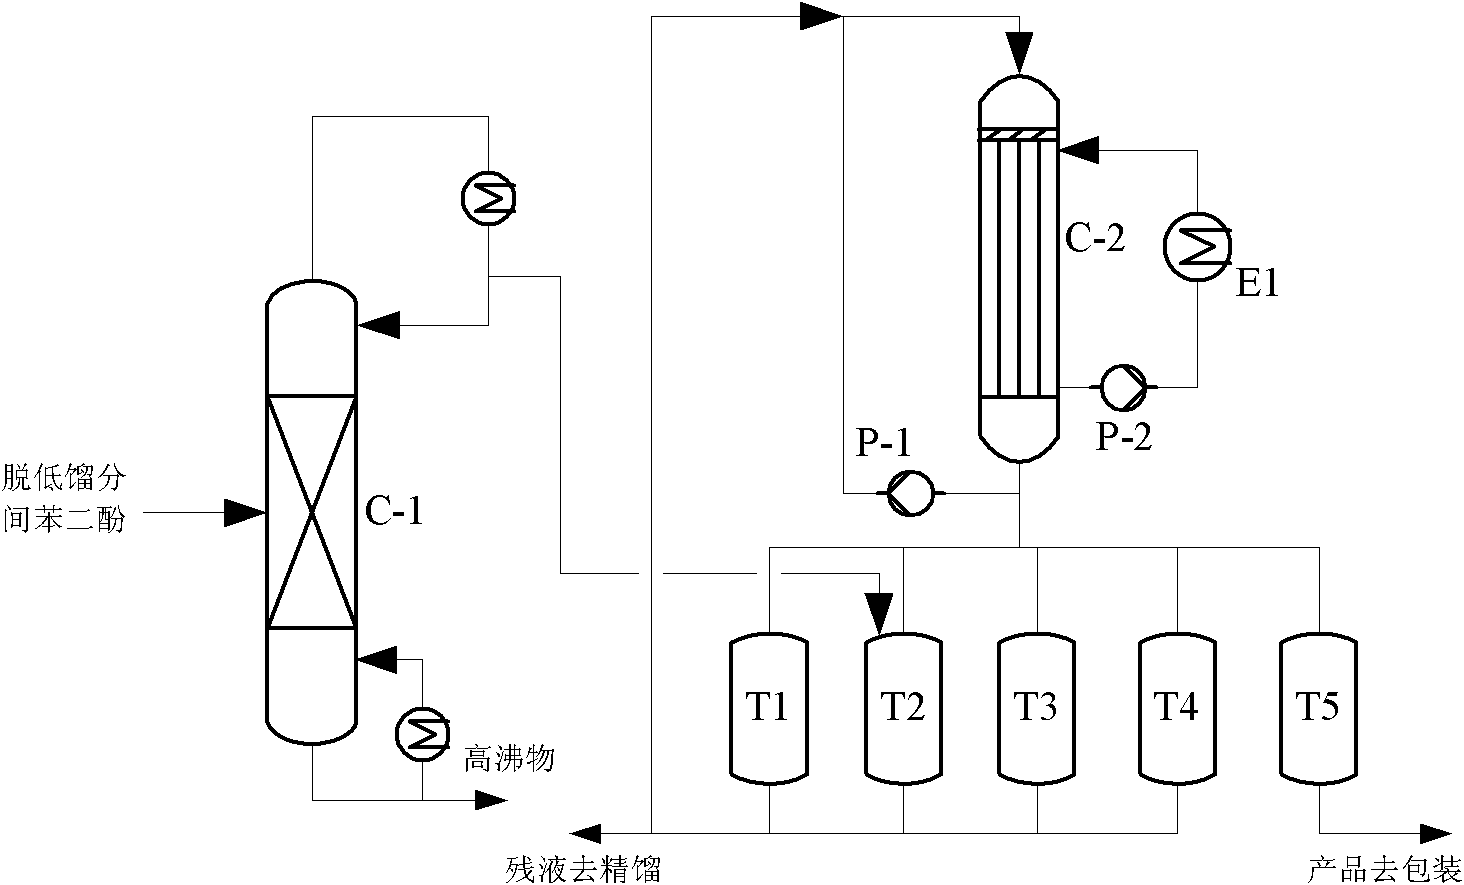 Method for preparing high-purity resorcinol through melt crystallization